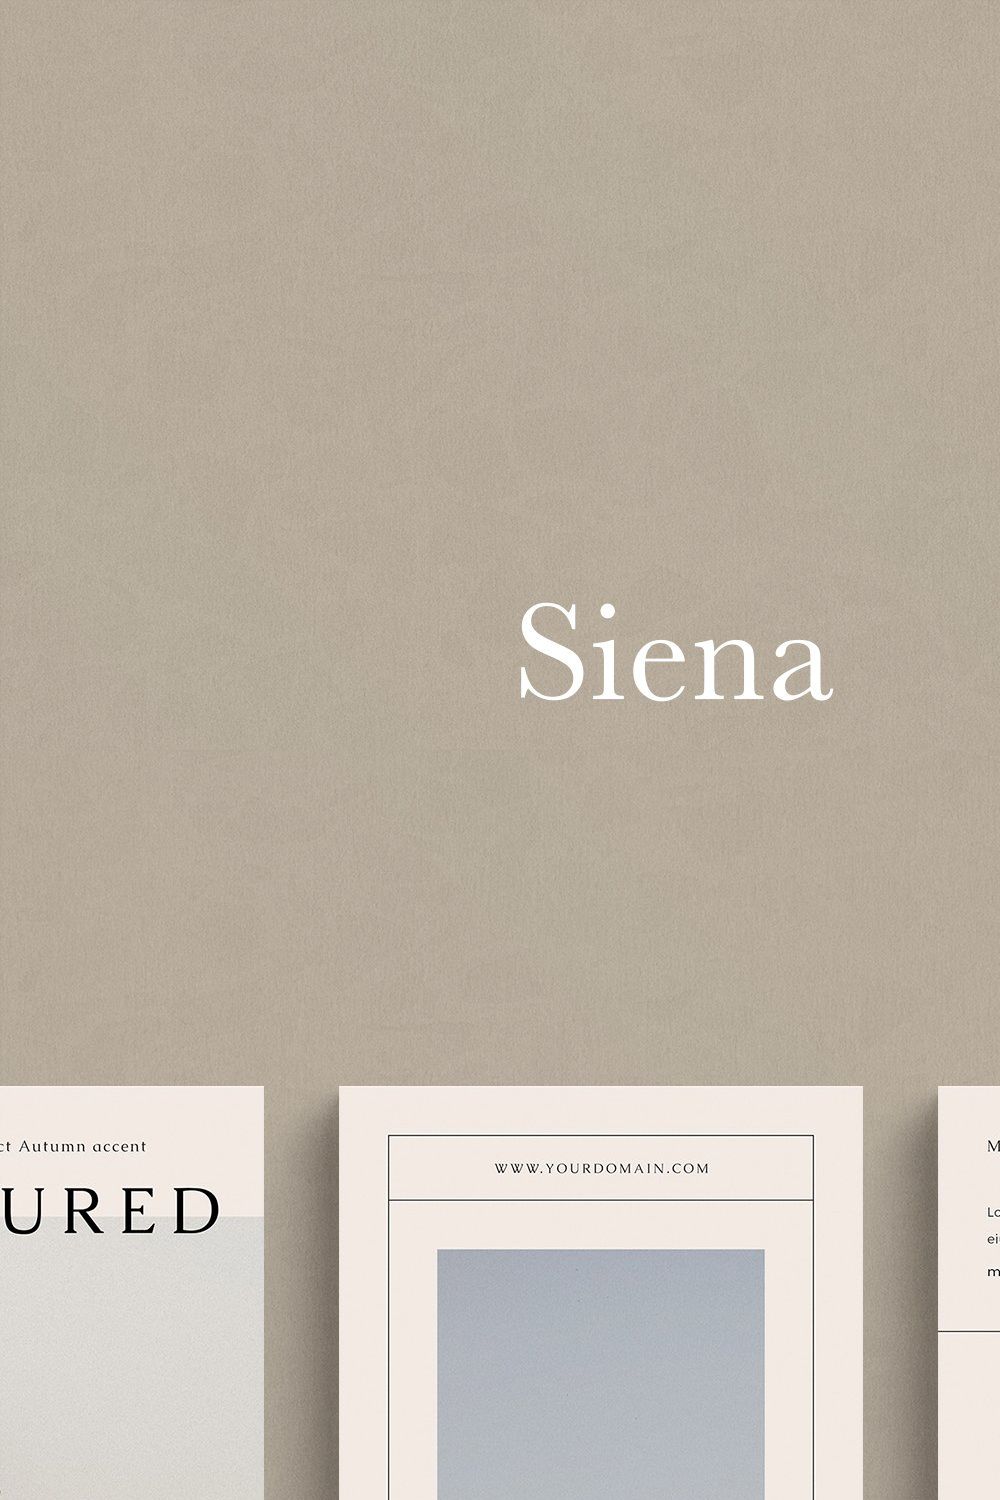 Siena Instagram Stories pinterest preview image.